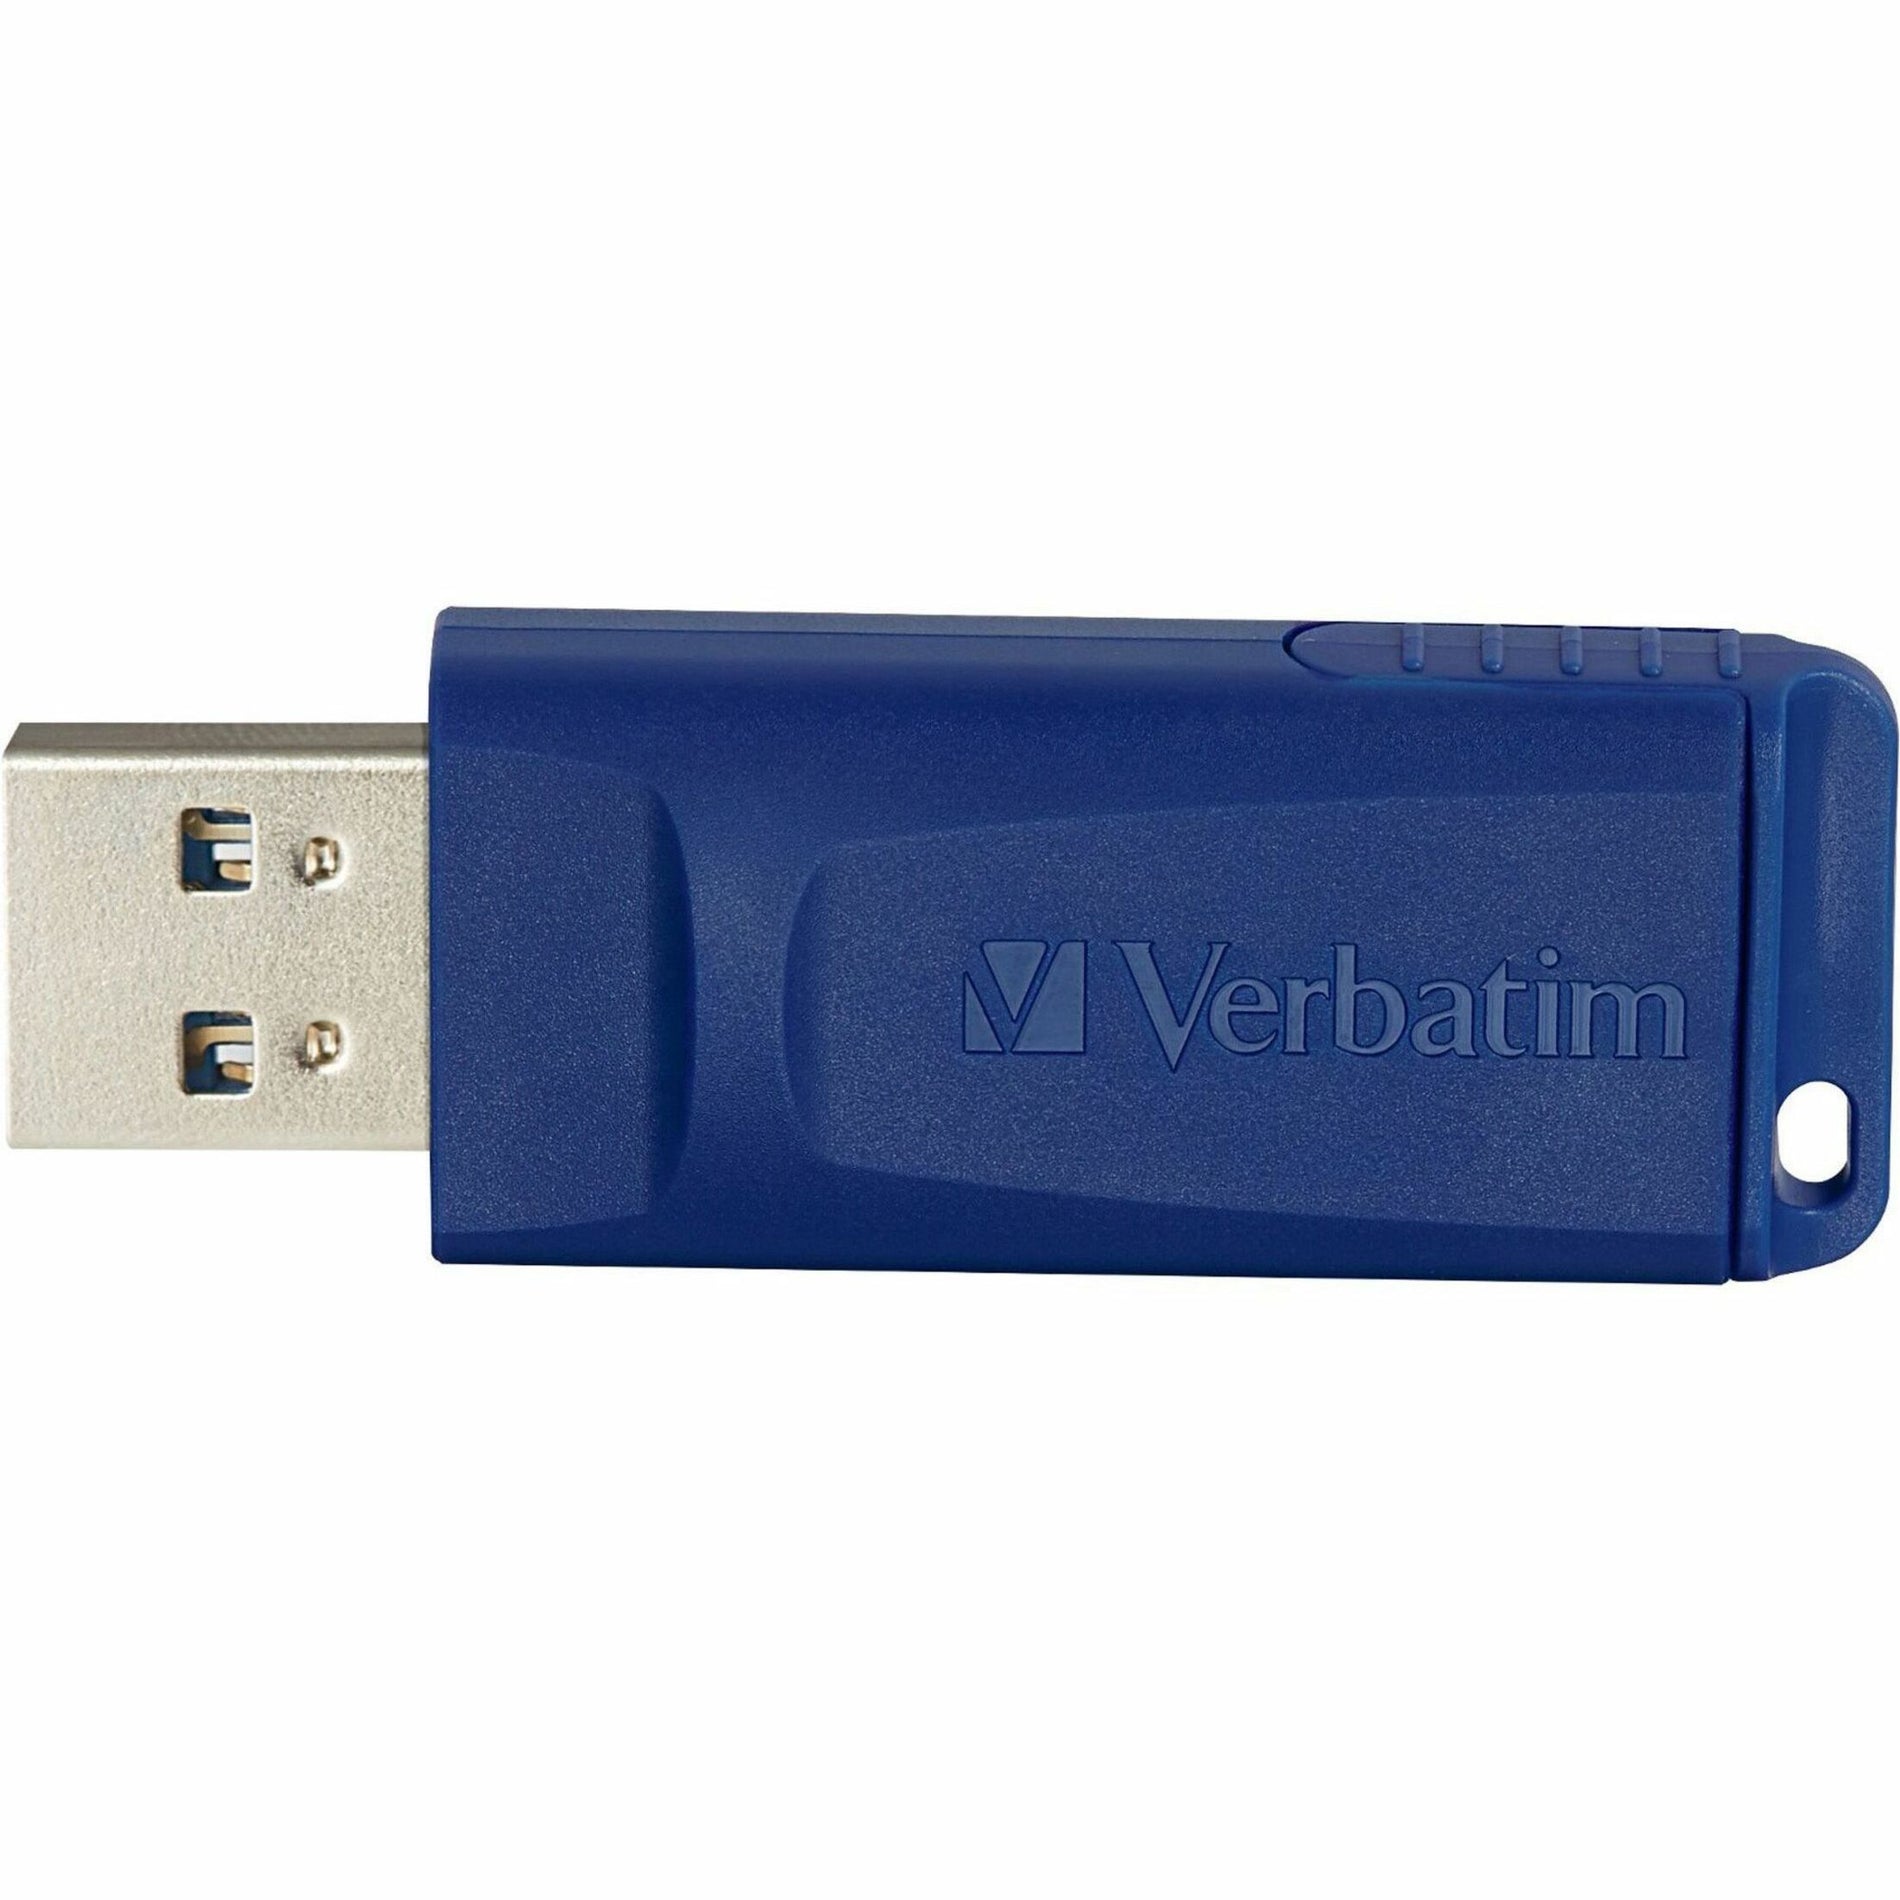 Microban 98658 64GB USB Flash Drive - Blue, Antimicrobial, Retractable, Capless